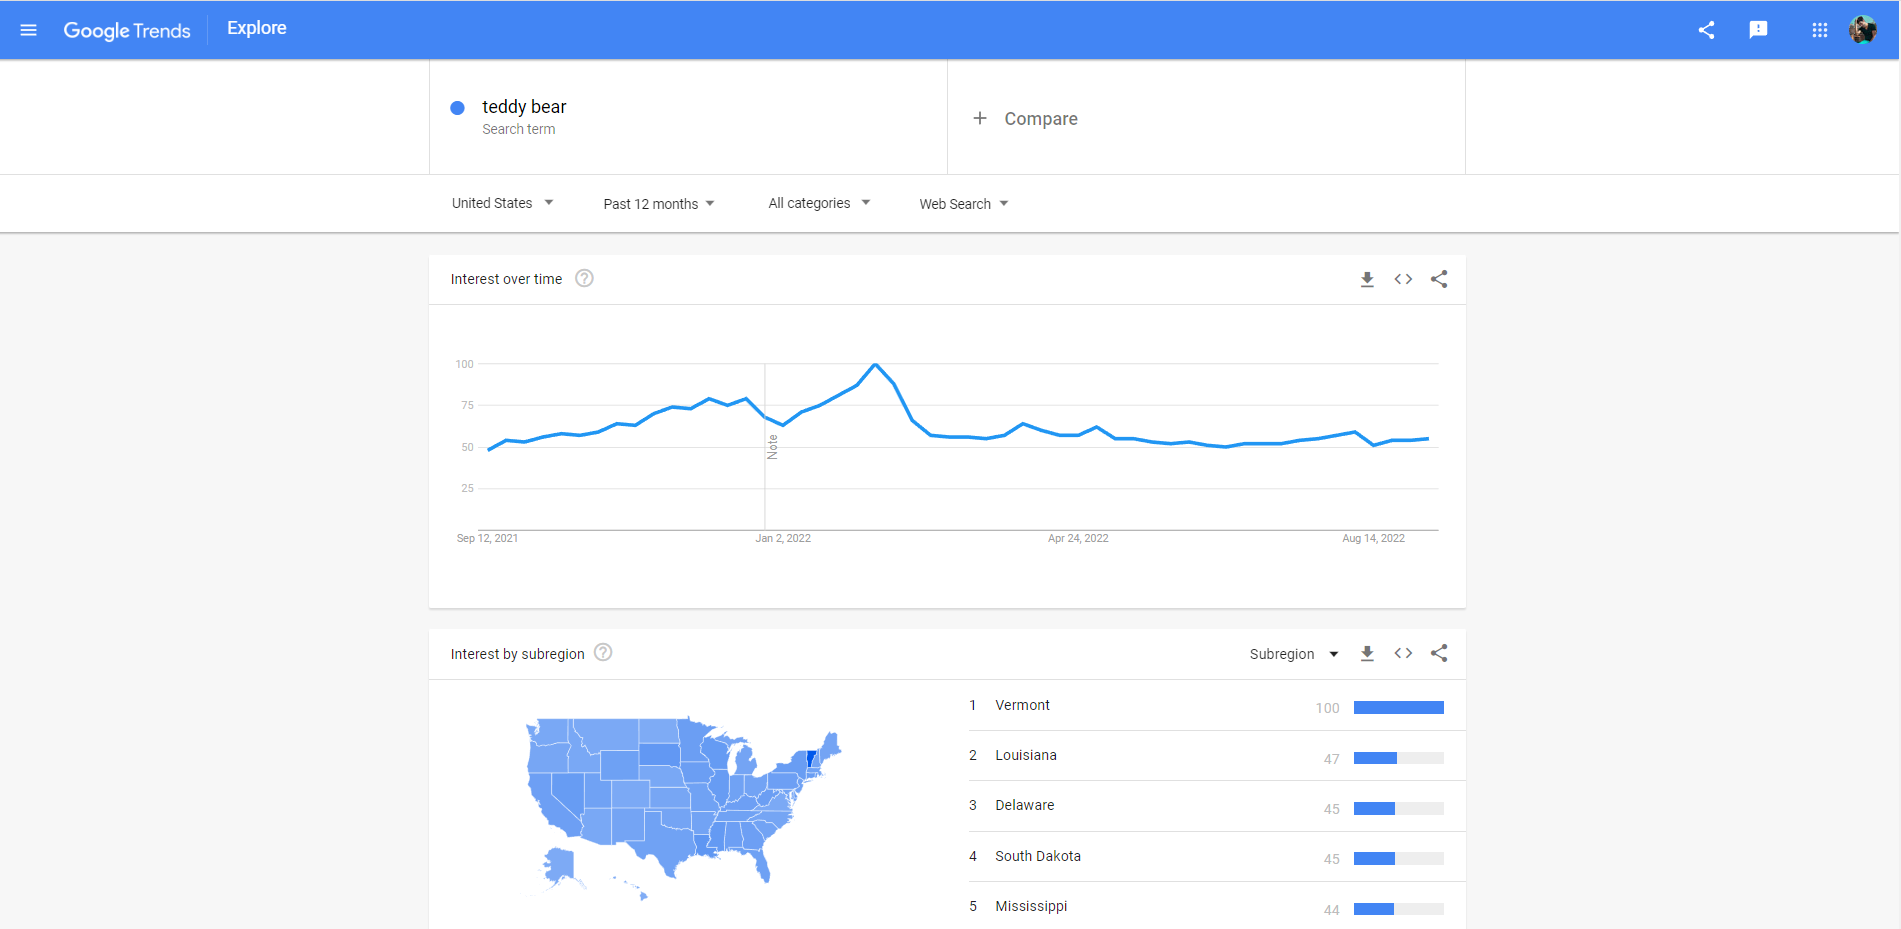 teddy bear google trend graph